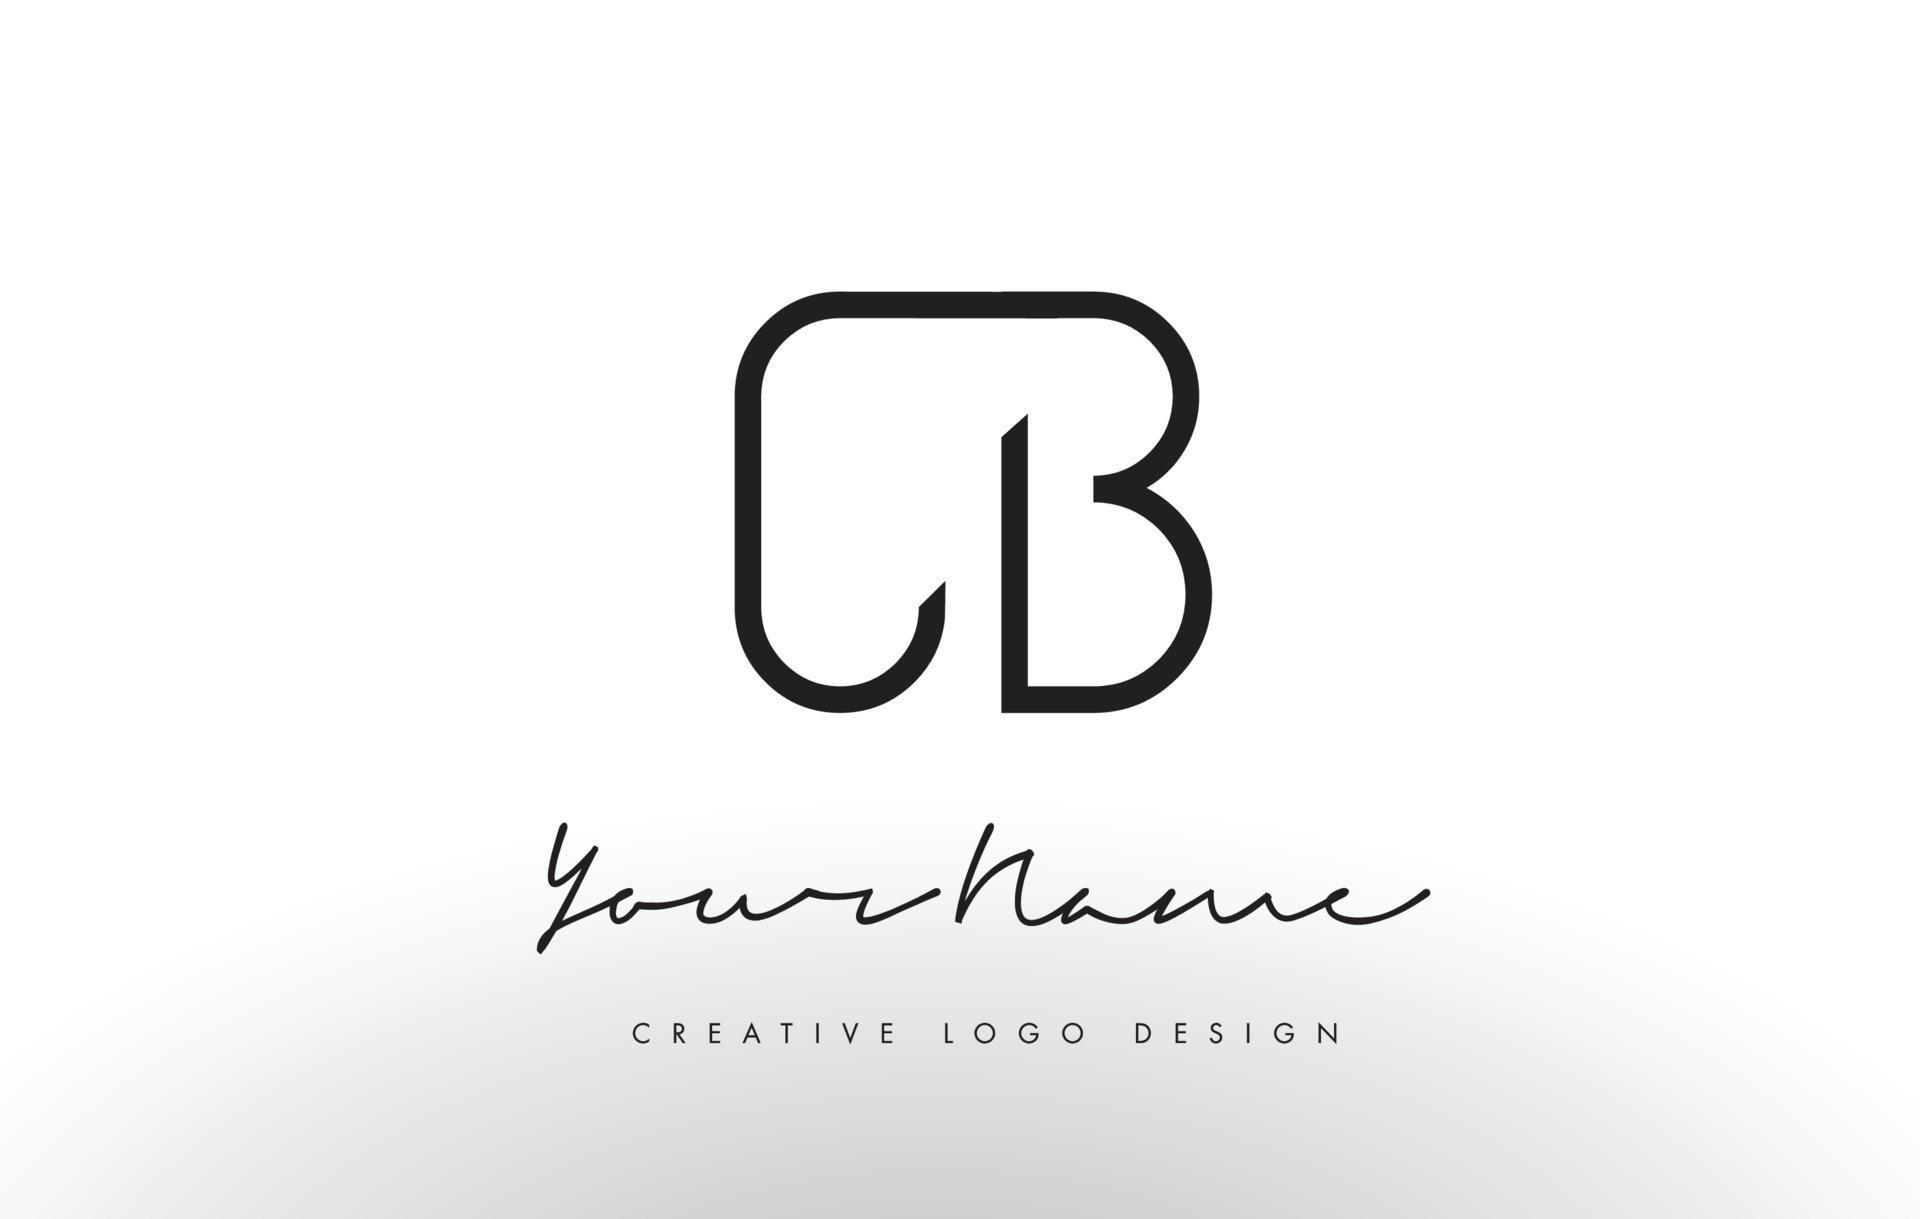 CB Letters Logo Design Slim. Creative Simple Black Letter Concept ...